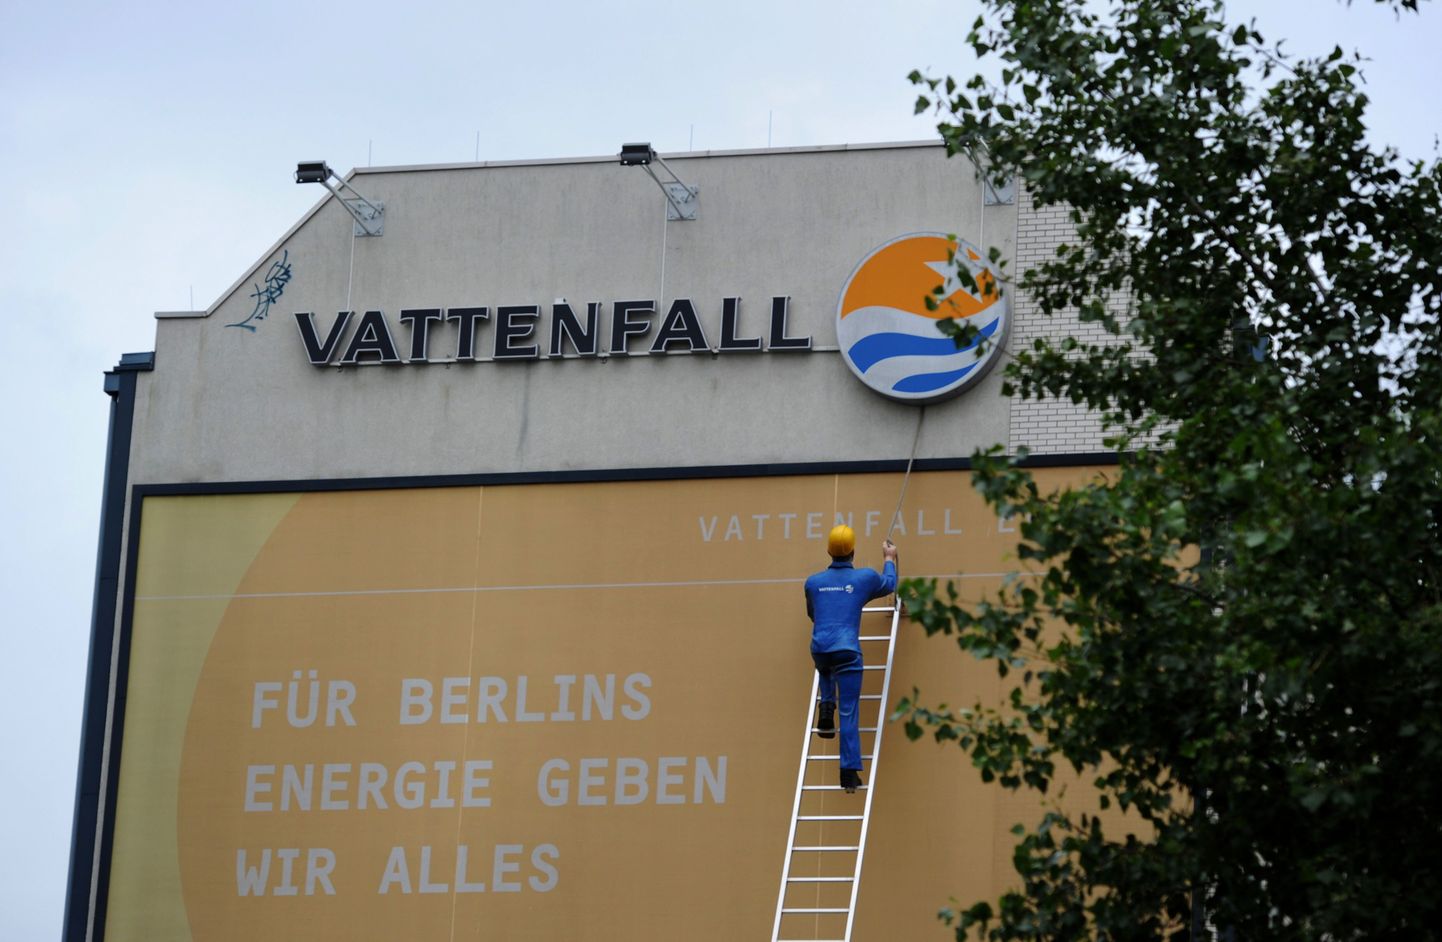 Vattenfalli reklaam Berliinis.